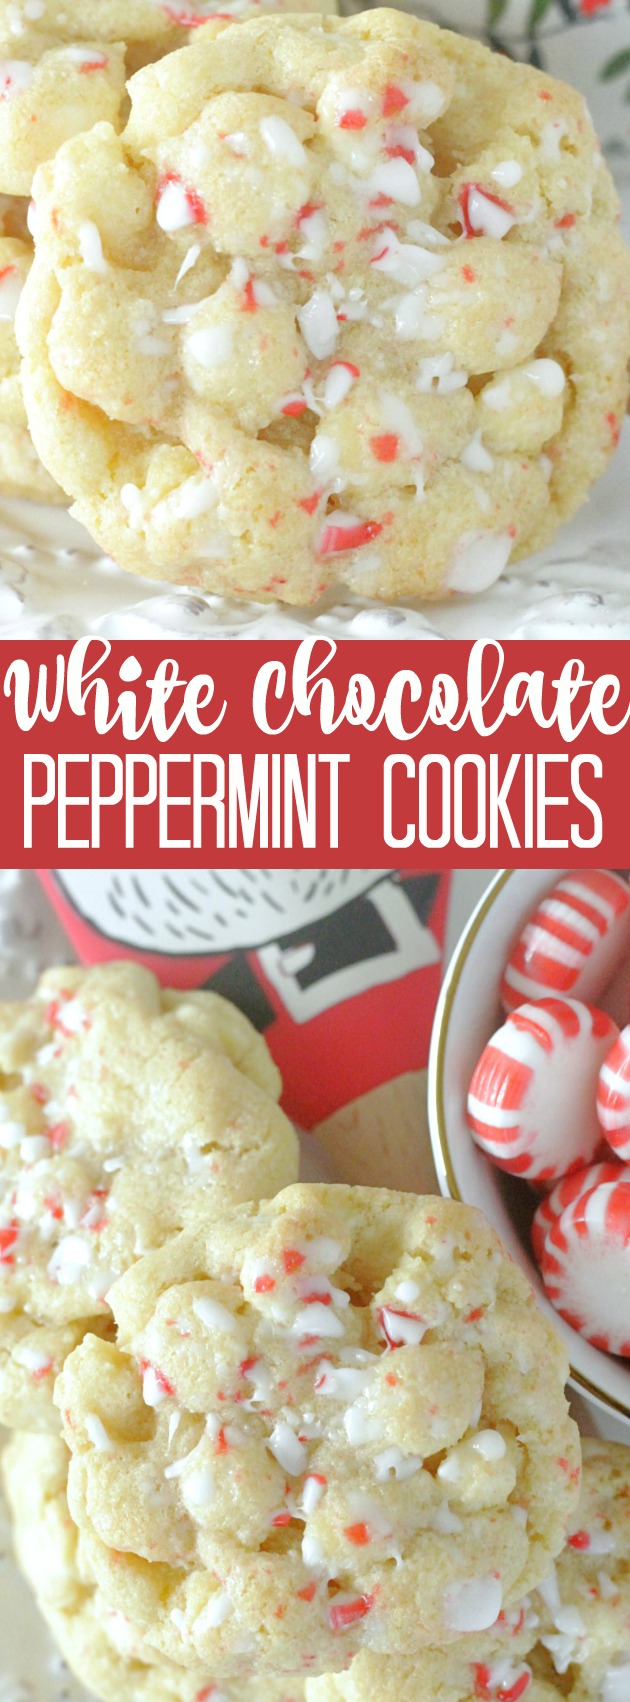 White Chocolate Peppermint Cookies | Foodtastic Mom #christmascookies #whitechocolatepeppermintcookies #cookierecipes via @foodtasticmom